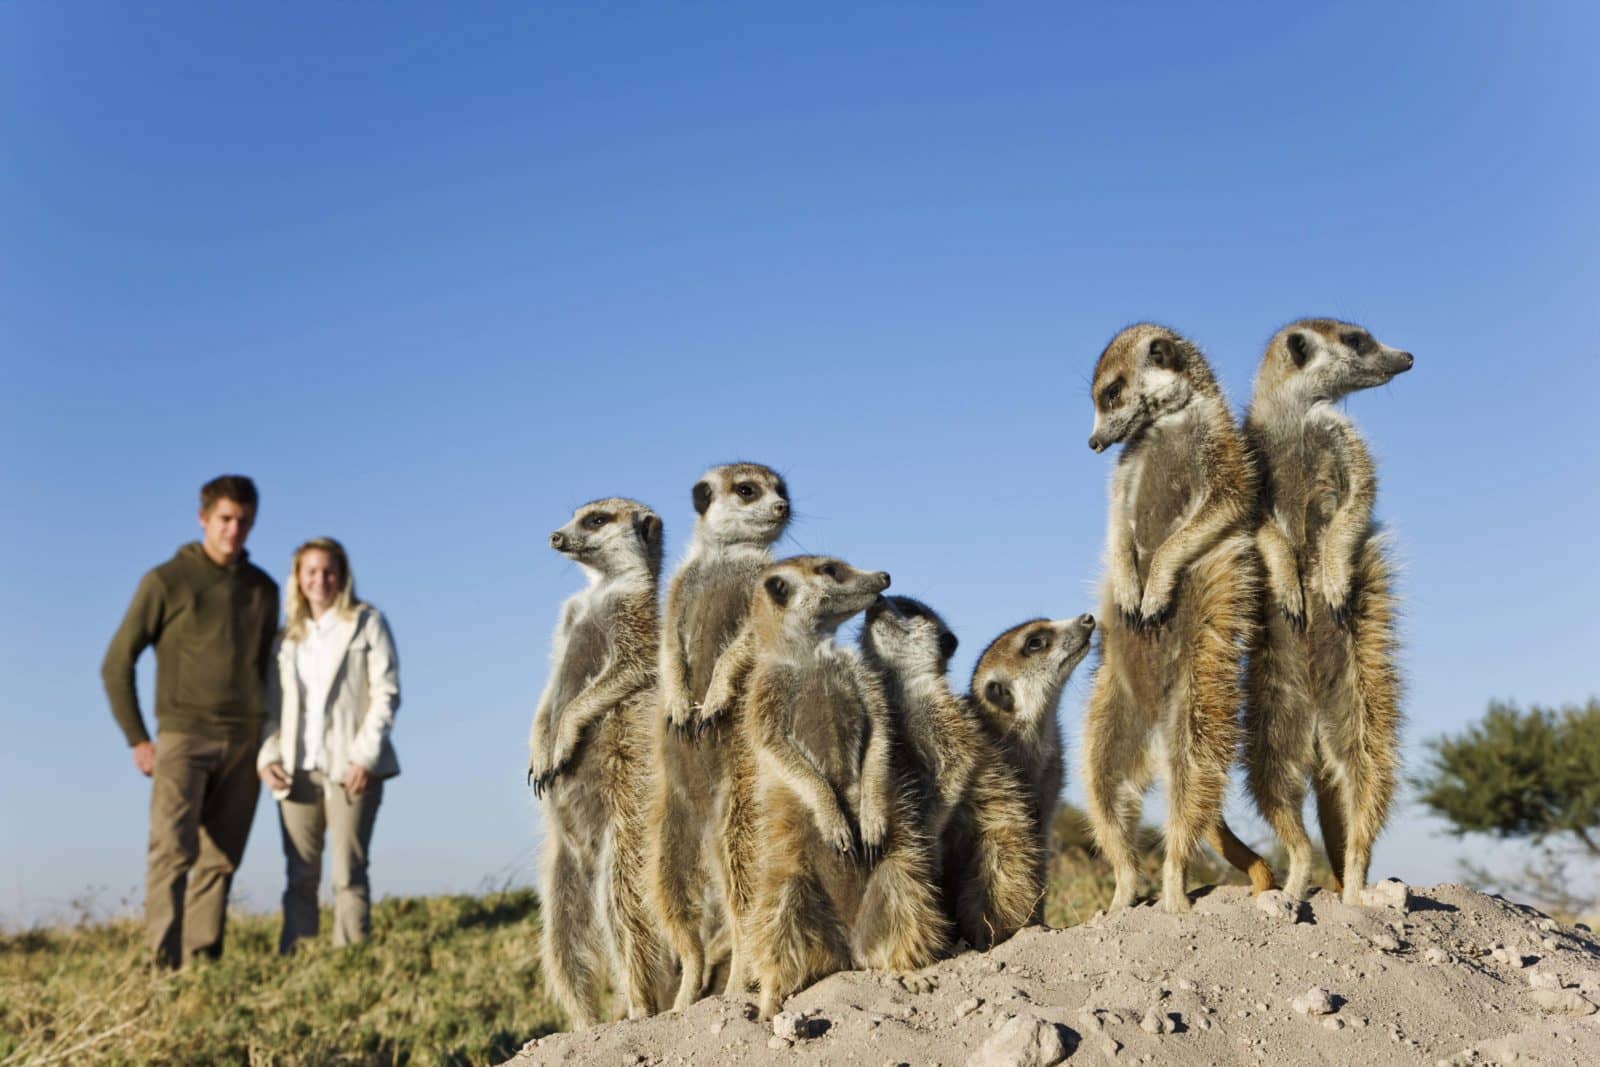 Guests thoroughly enjoy the semi habituated Meerkat experience at Camp Kalahari